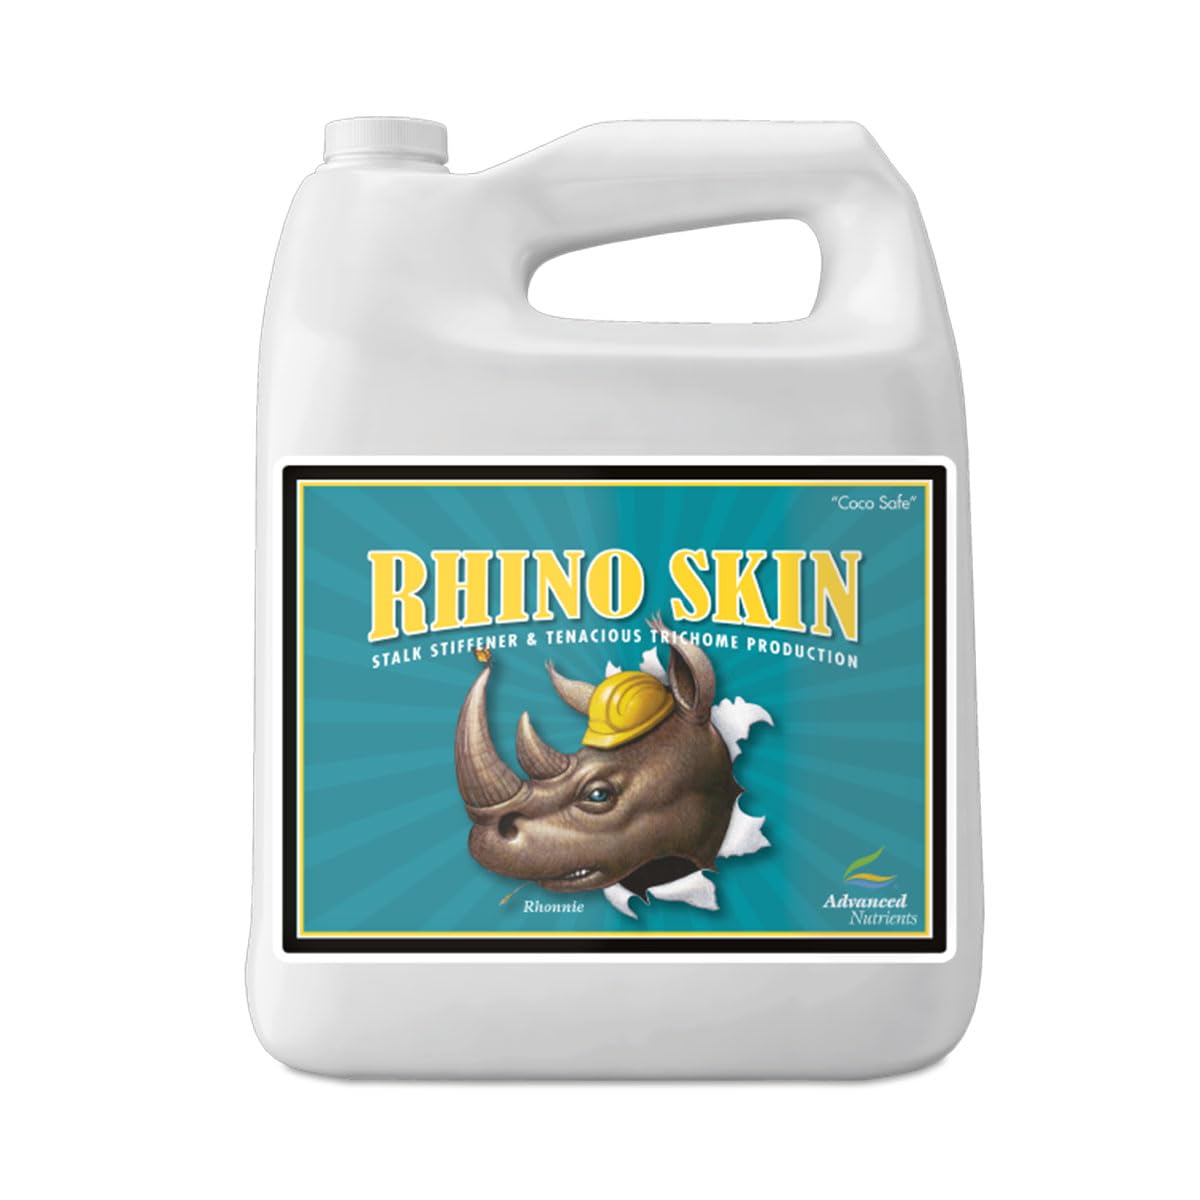 Advanced Nutrients Rhino Skin …